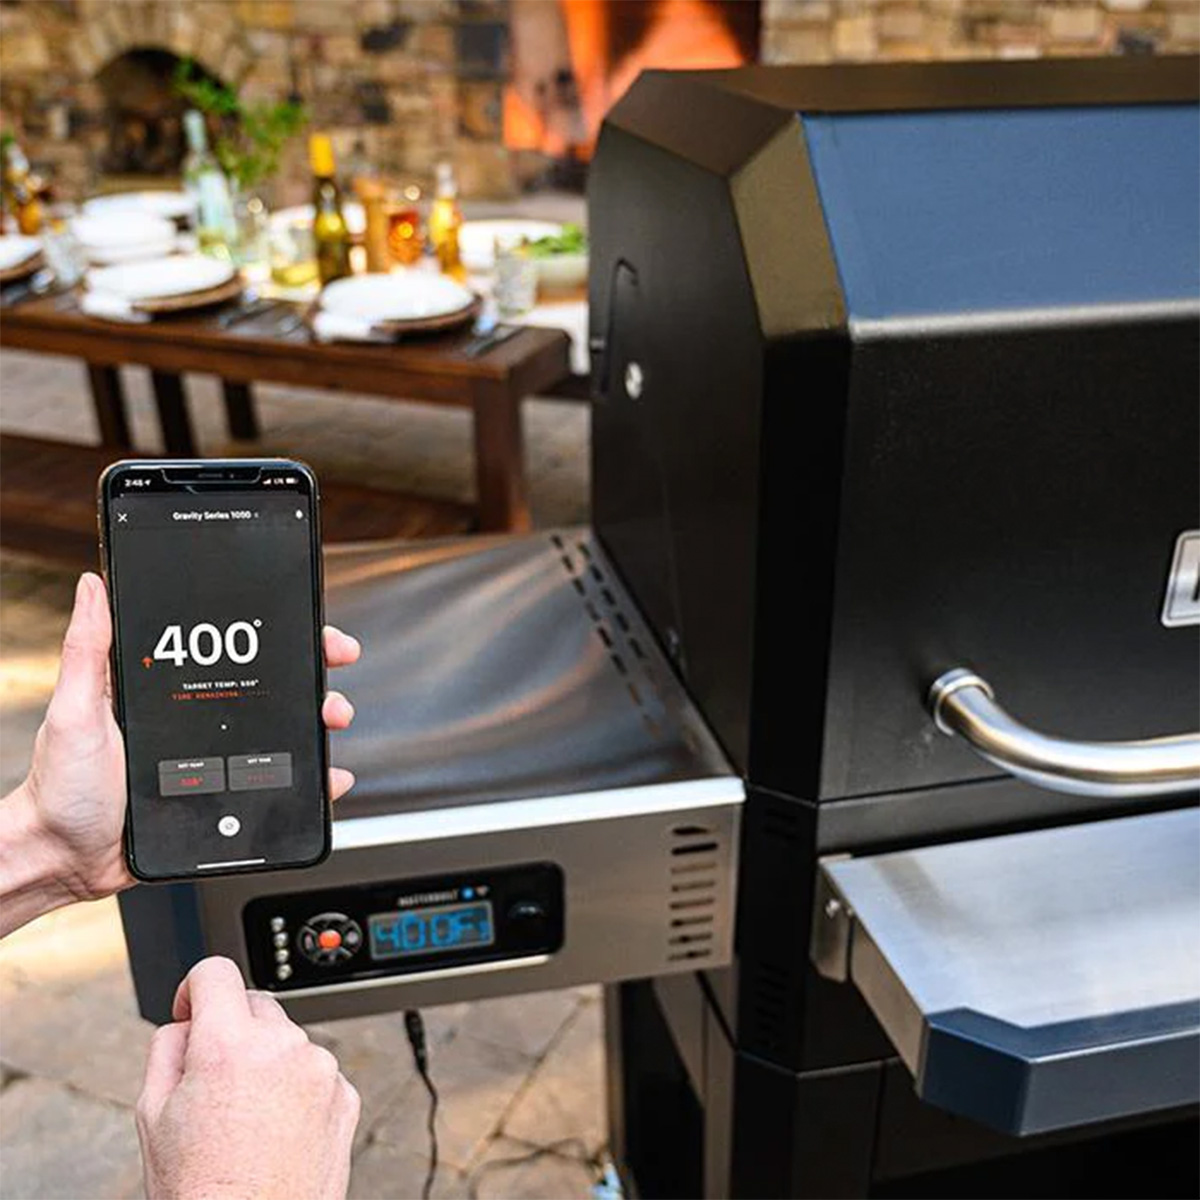 Masterbuilt Gravity Series 1050 Digital Charcoal BBQ und Smoker